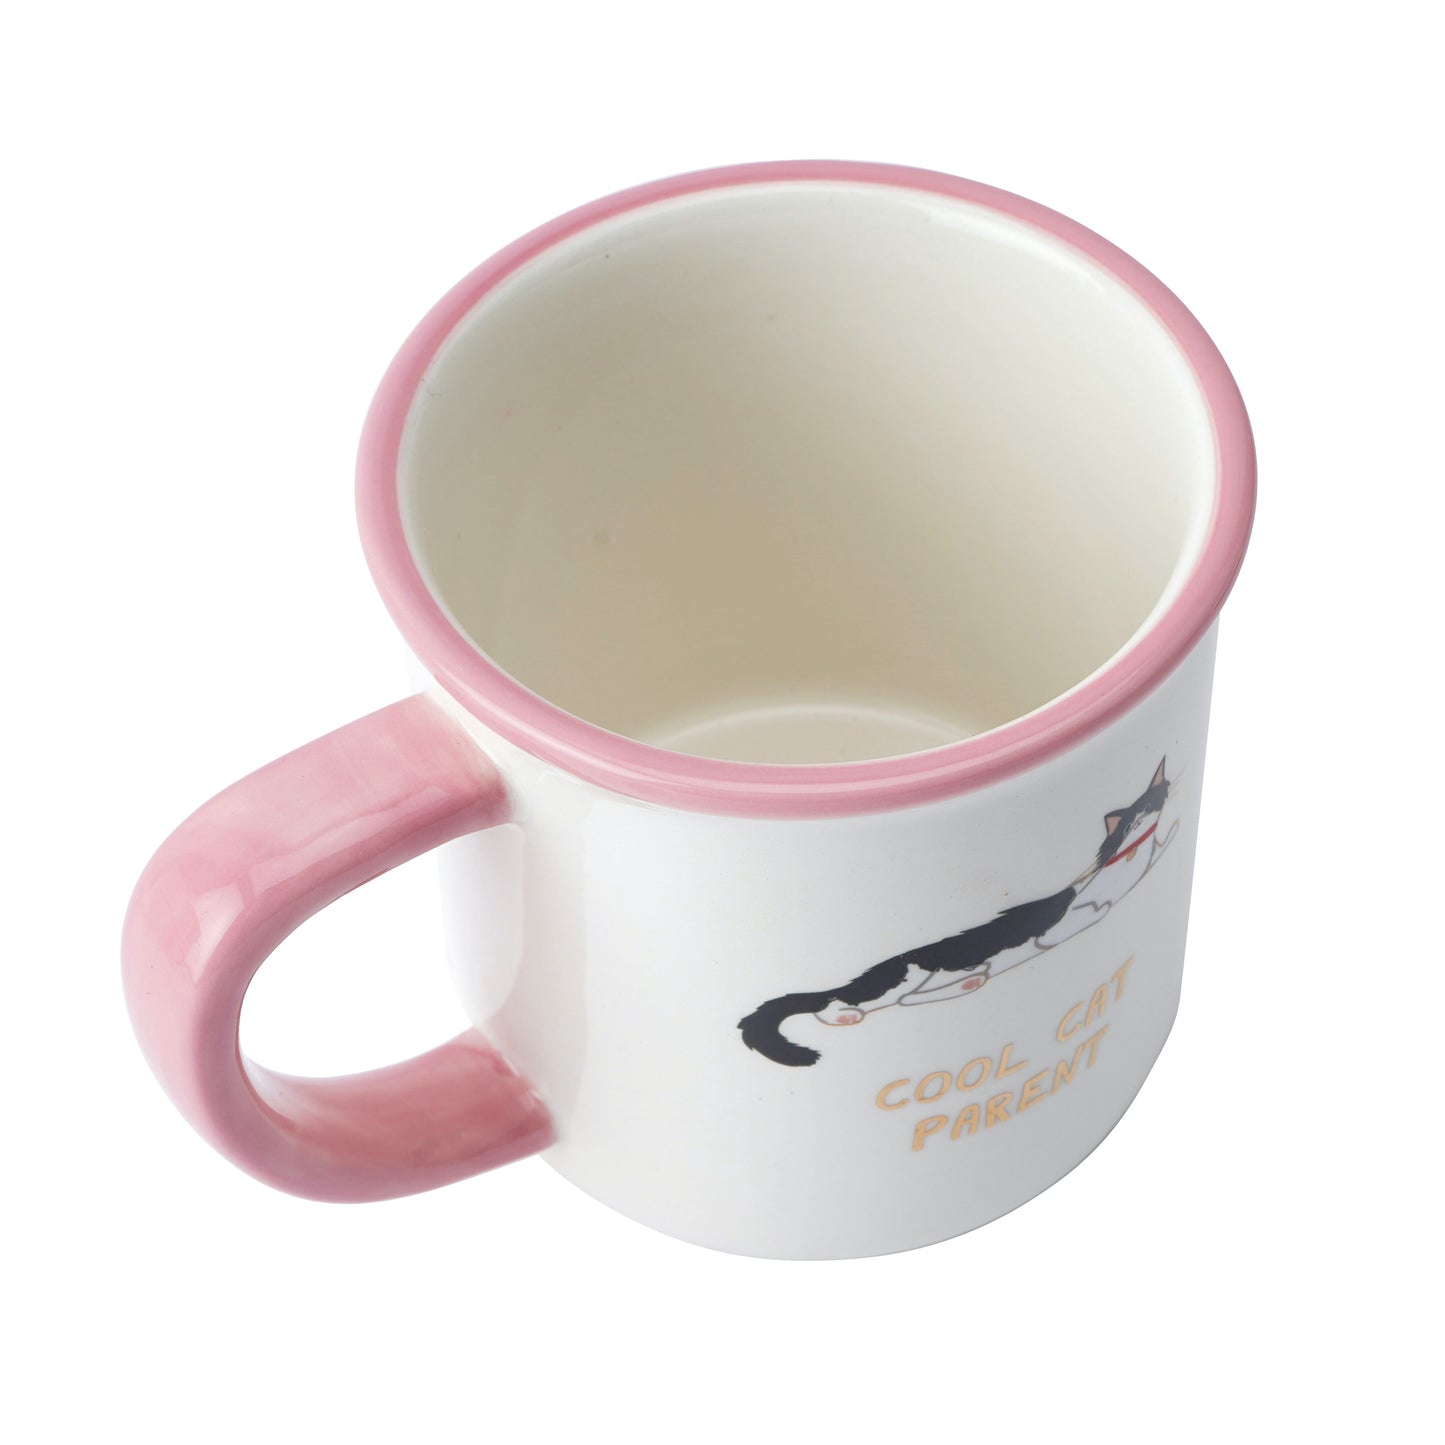 'Cool Cat Parent' Ceramic Mug in Gift Box